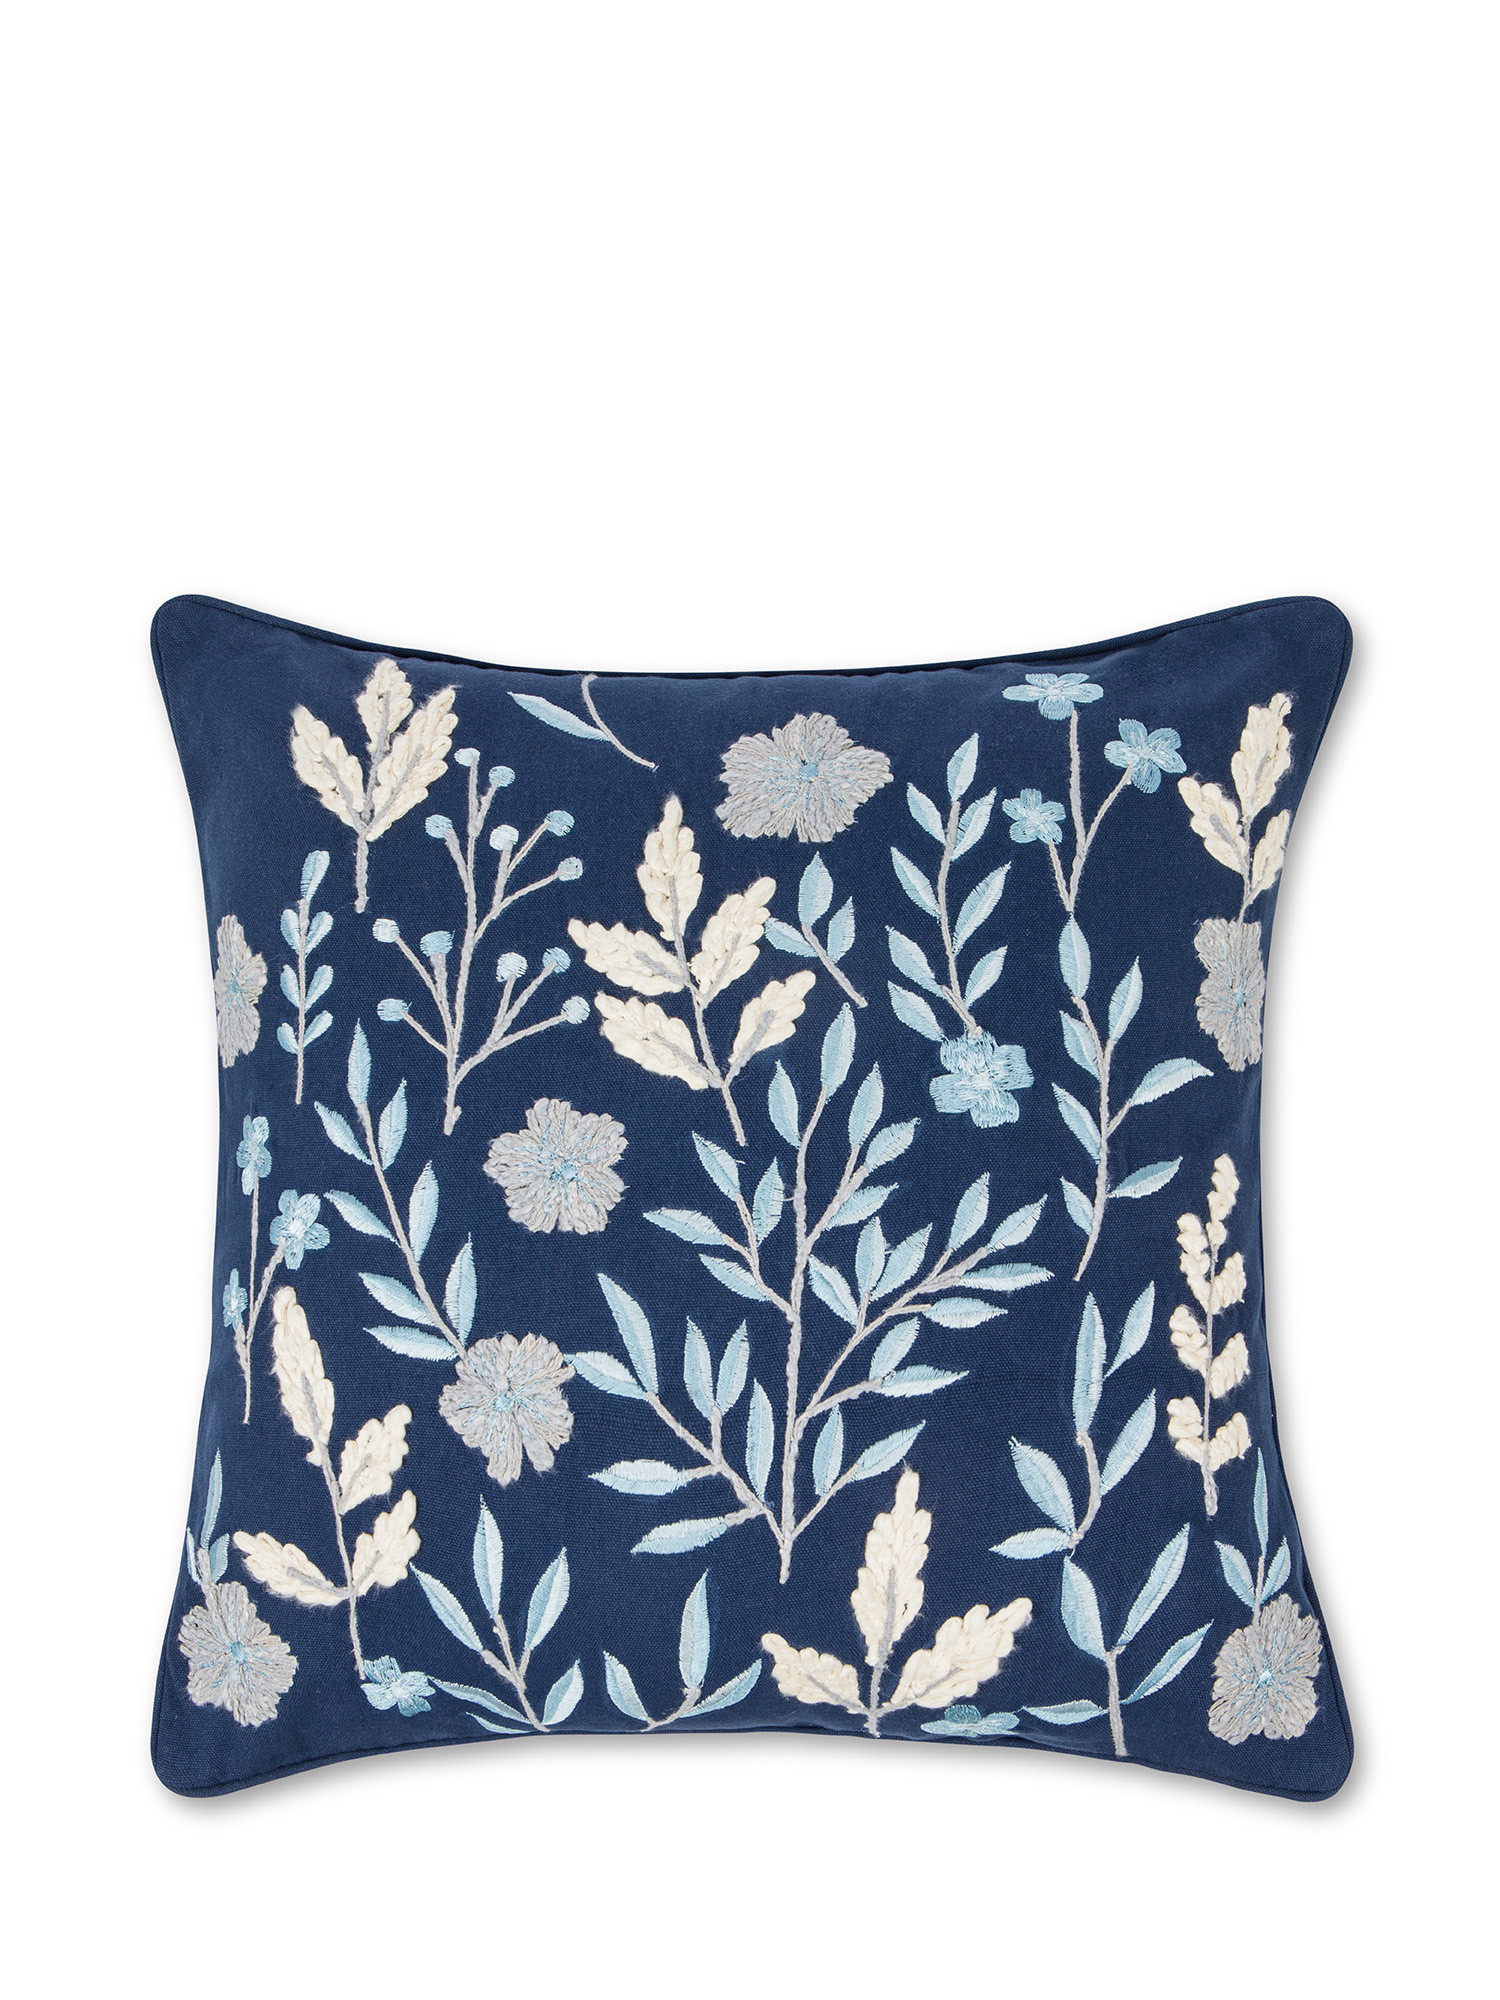 Cuscino ricamato fiori e foglie 45X45cm, Blu, large image number 0